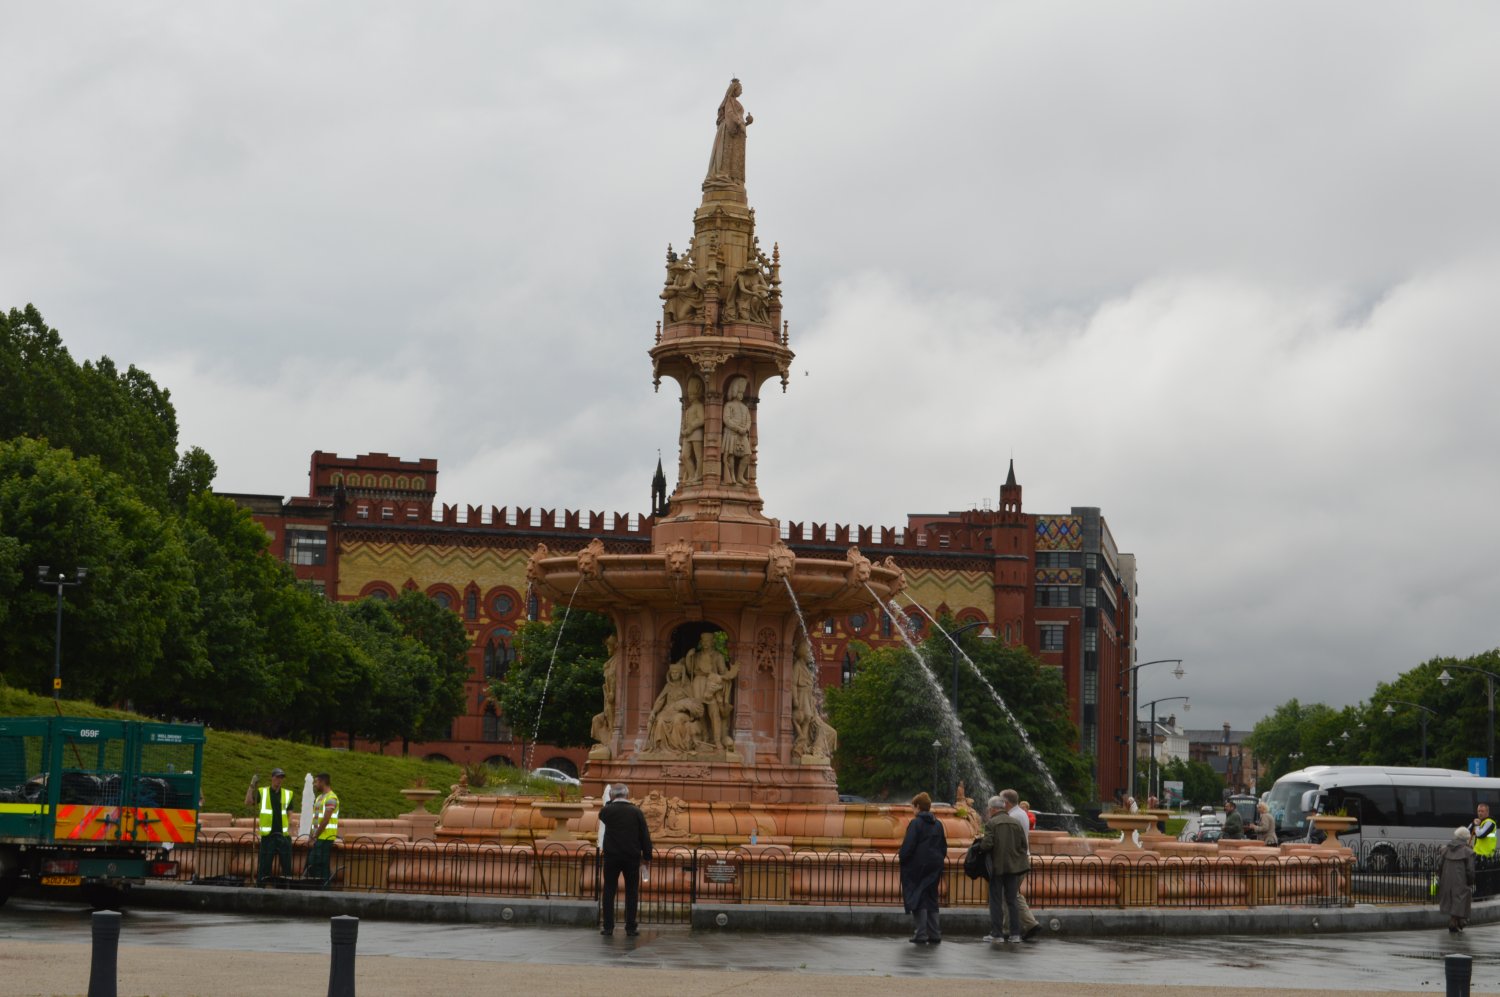 Glasgow Green Fountain